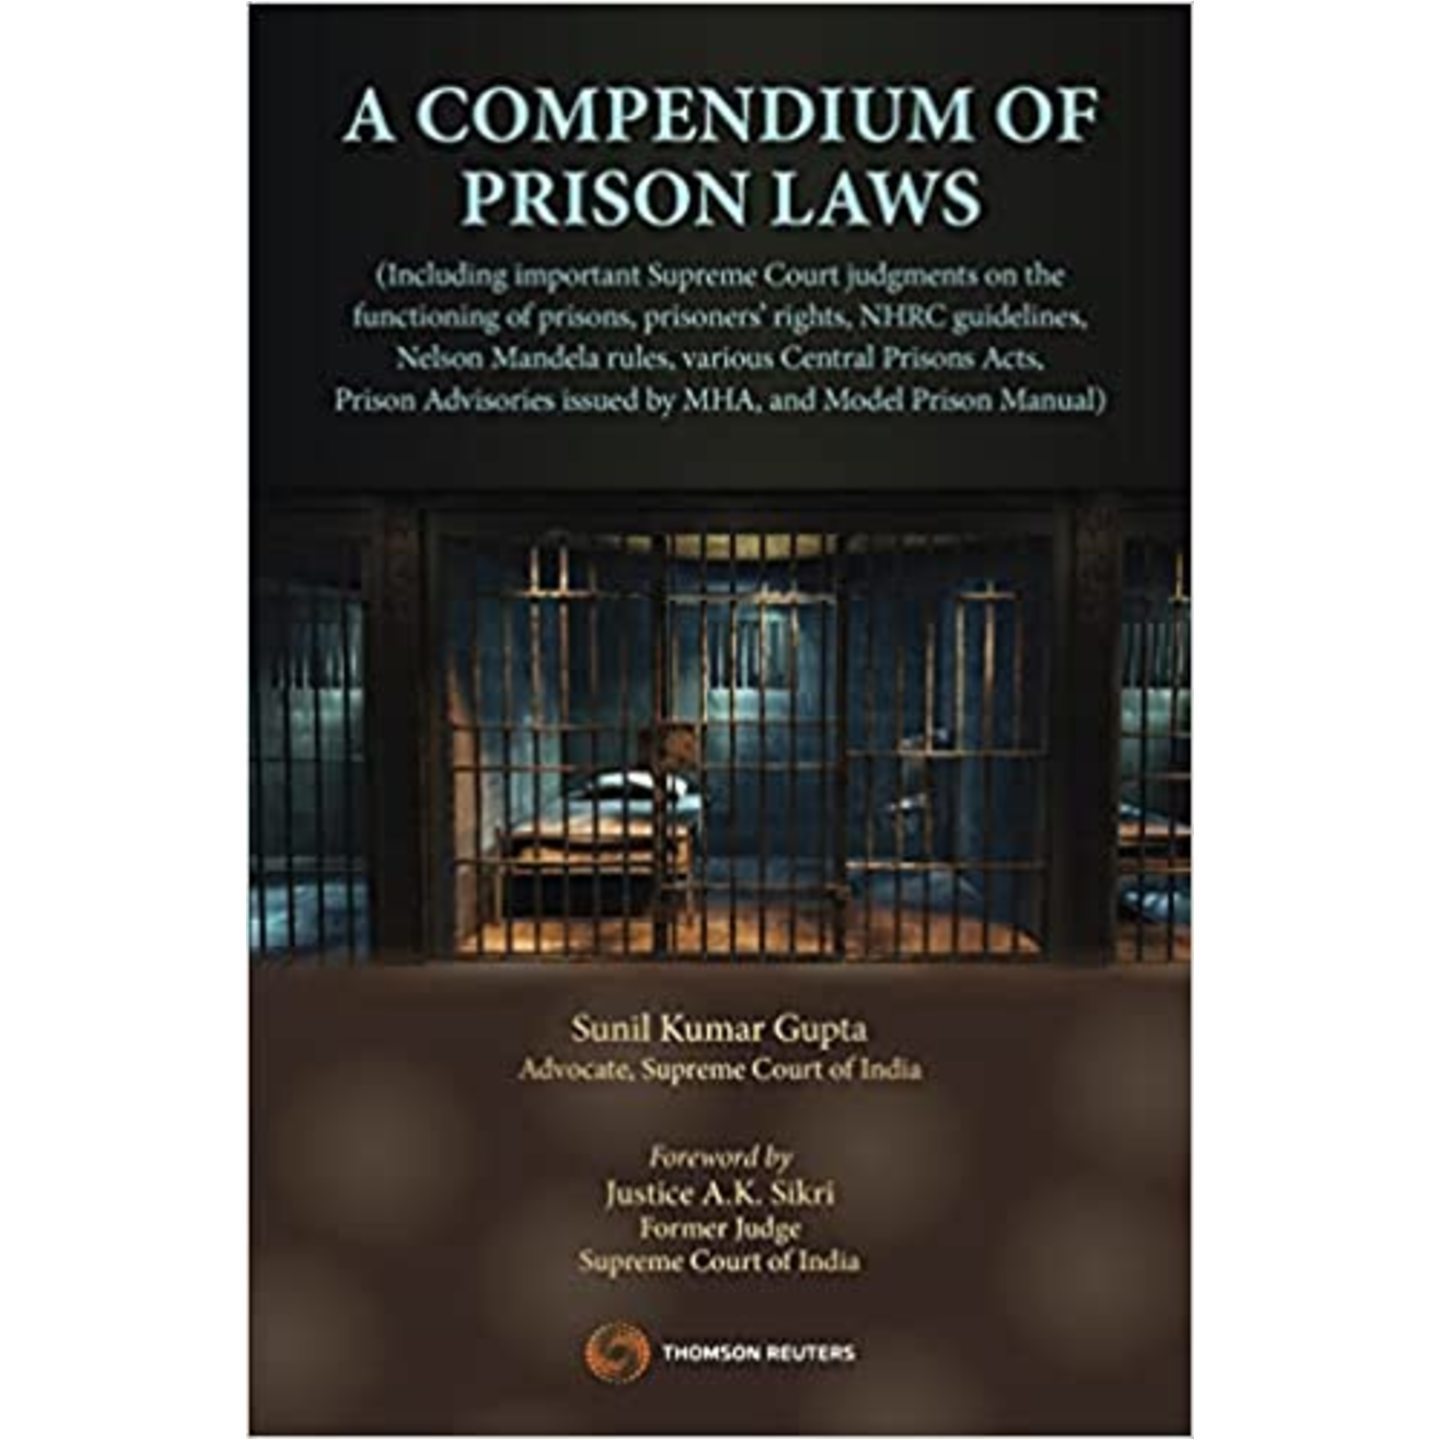 A Compendium of Prison Laws